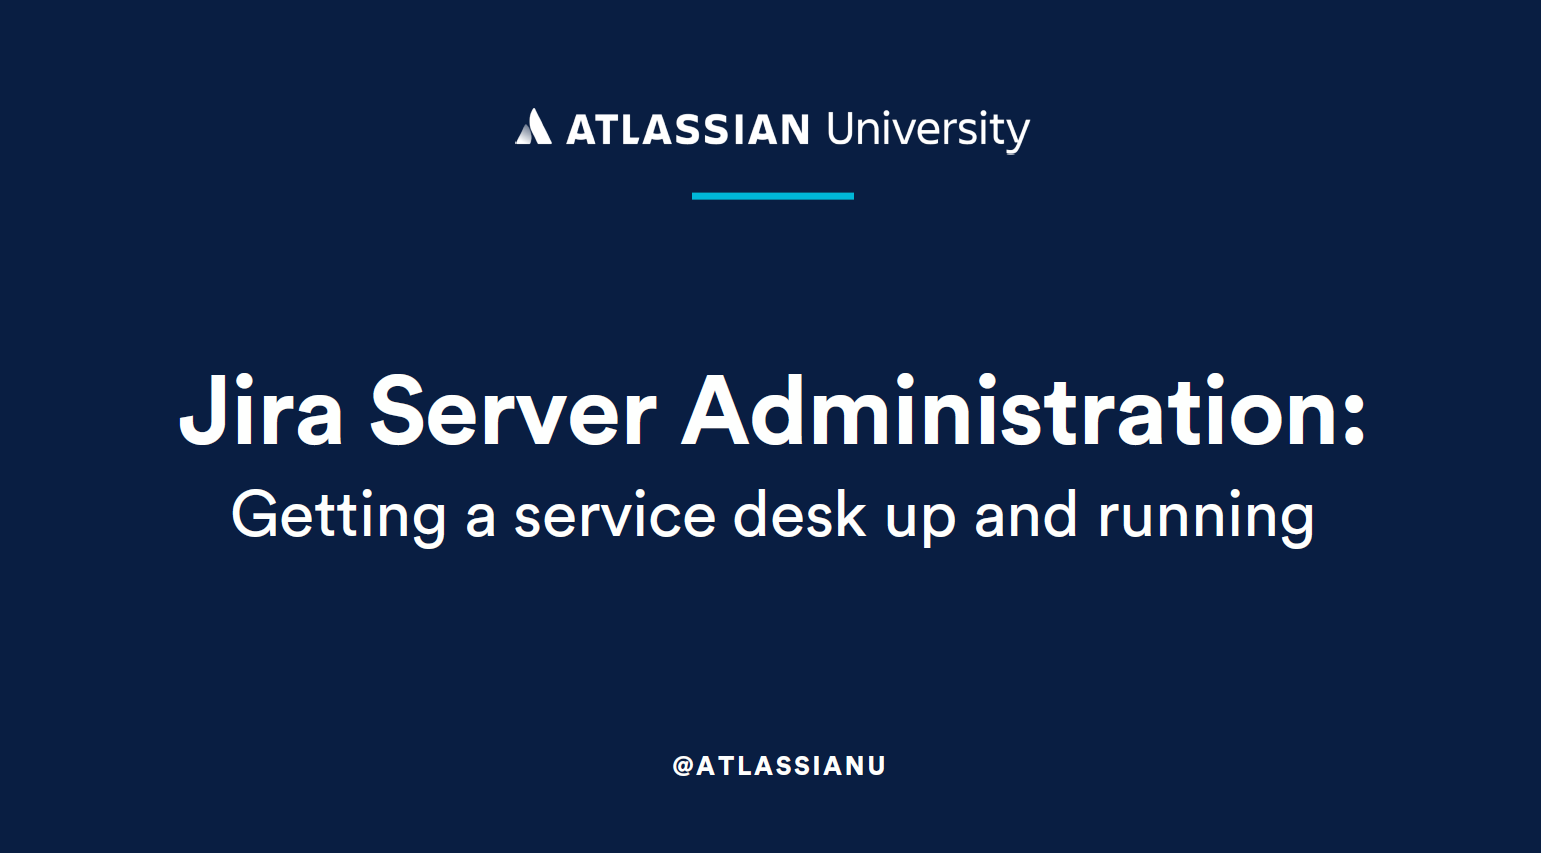 Jira Server Administration service desk (1)